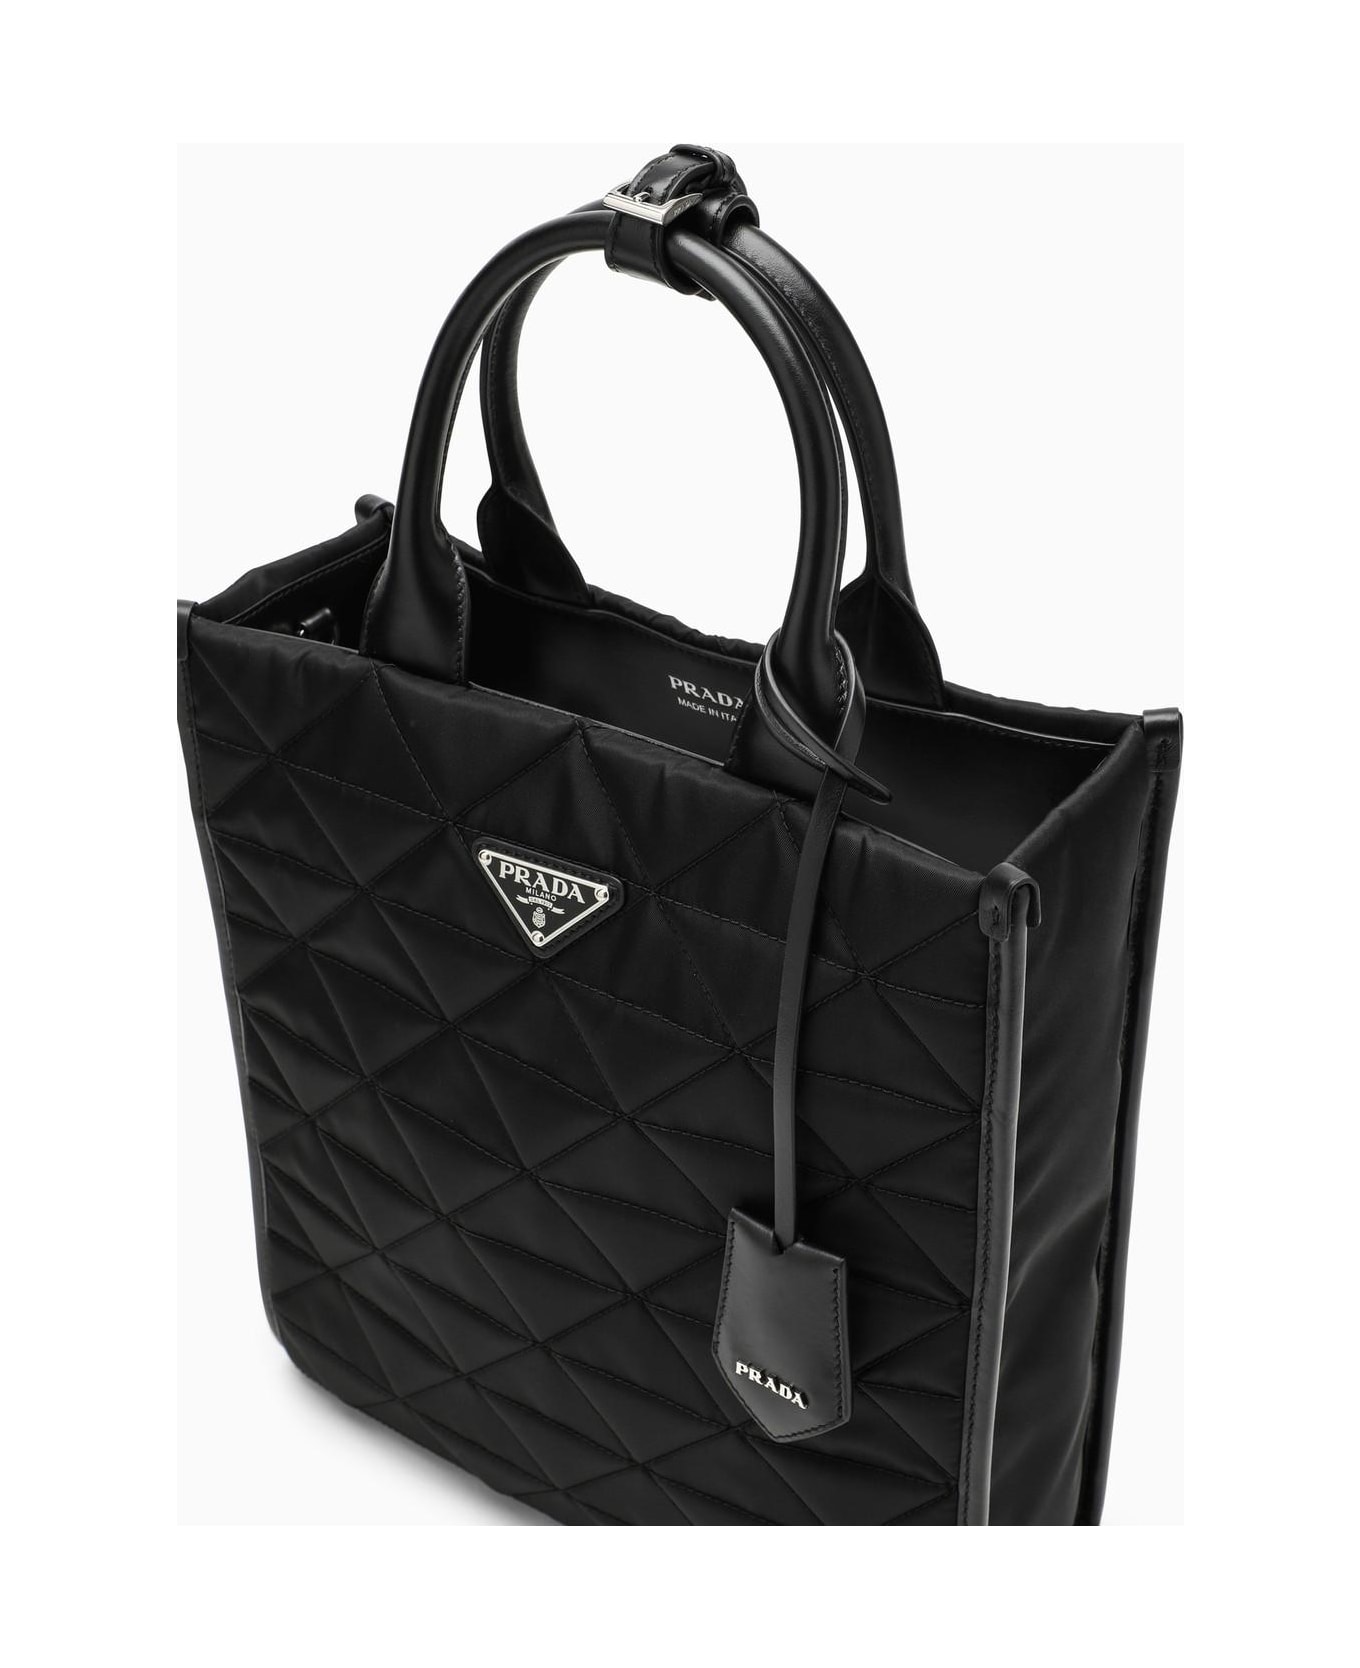 Prada Black Re-nylon Tote Bag - Nero